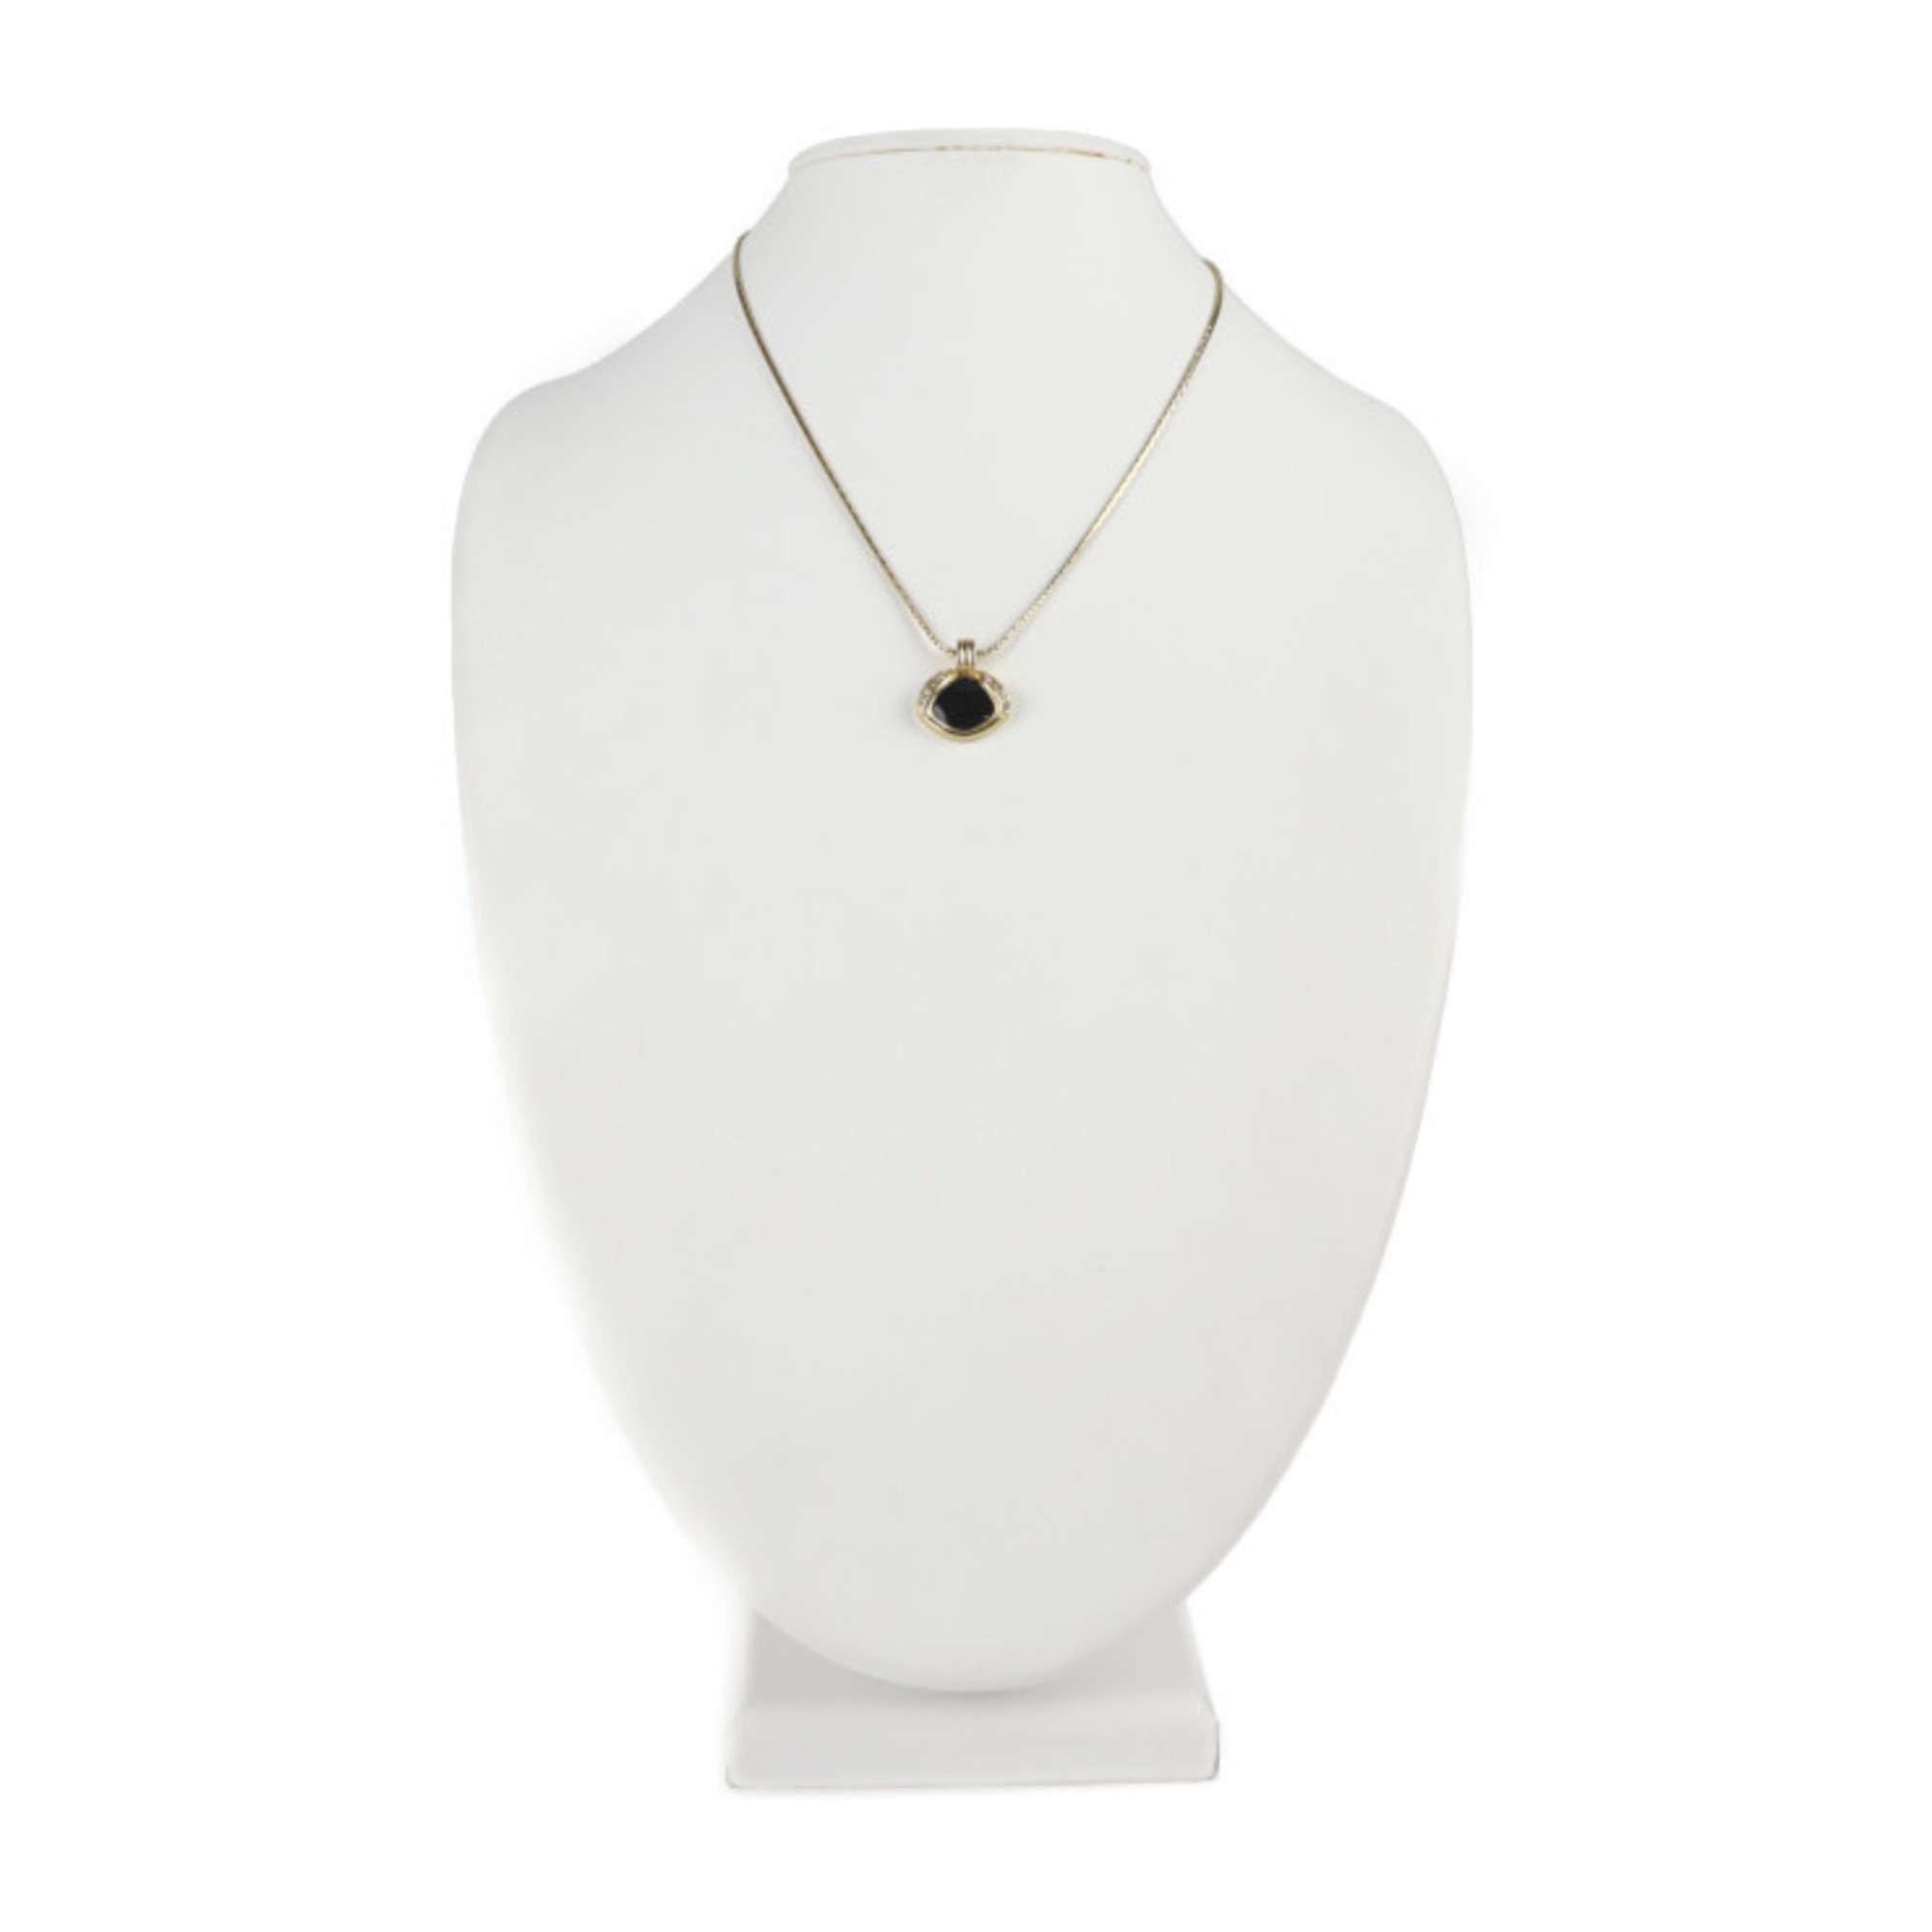 Christian Dior necklace metal gold black pendant rhinestone